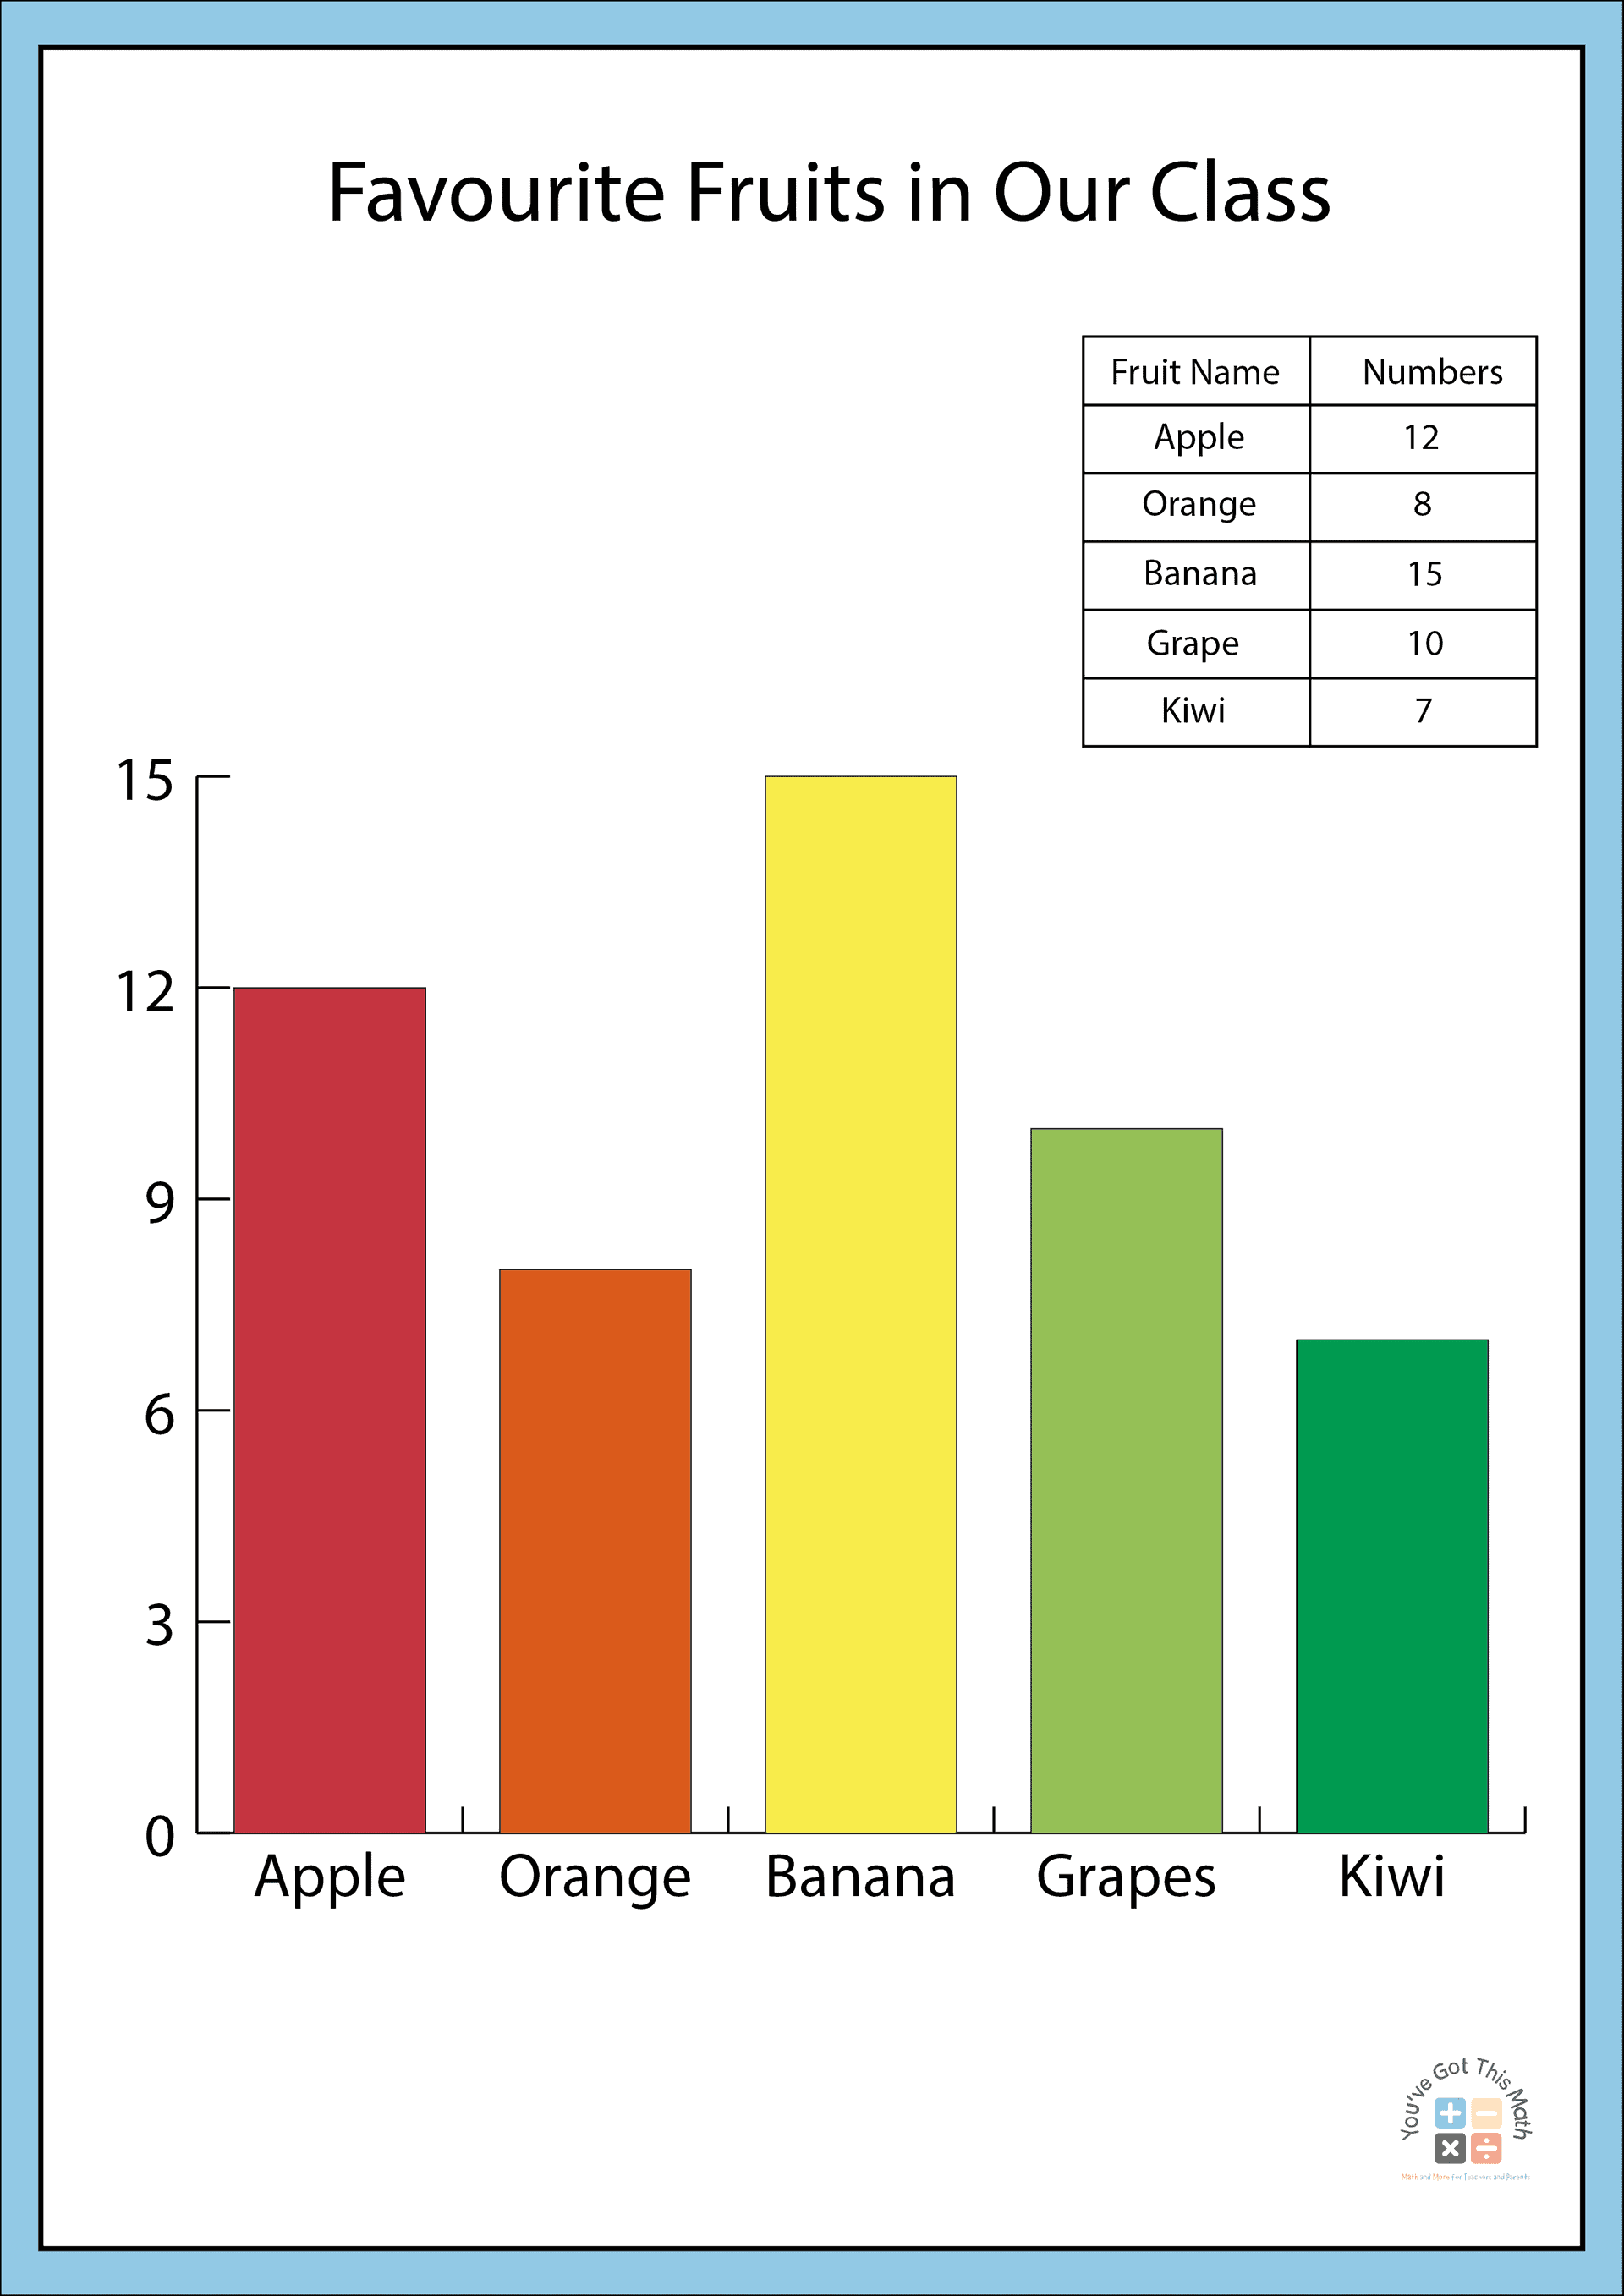 Showing bar graph